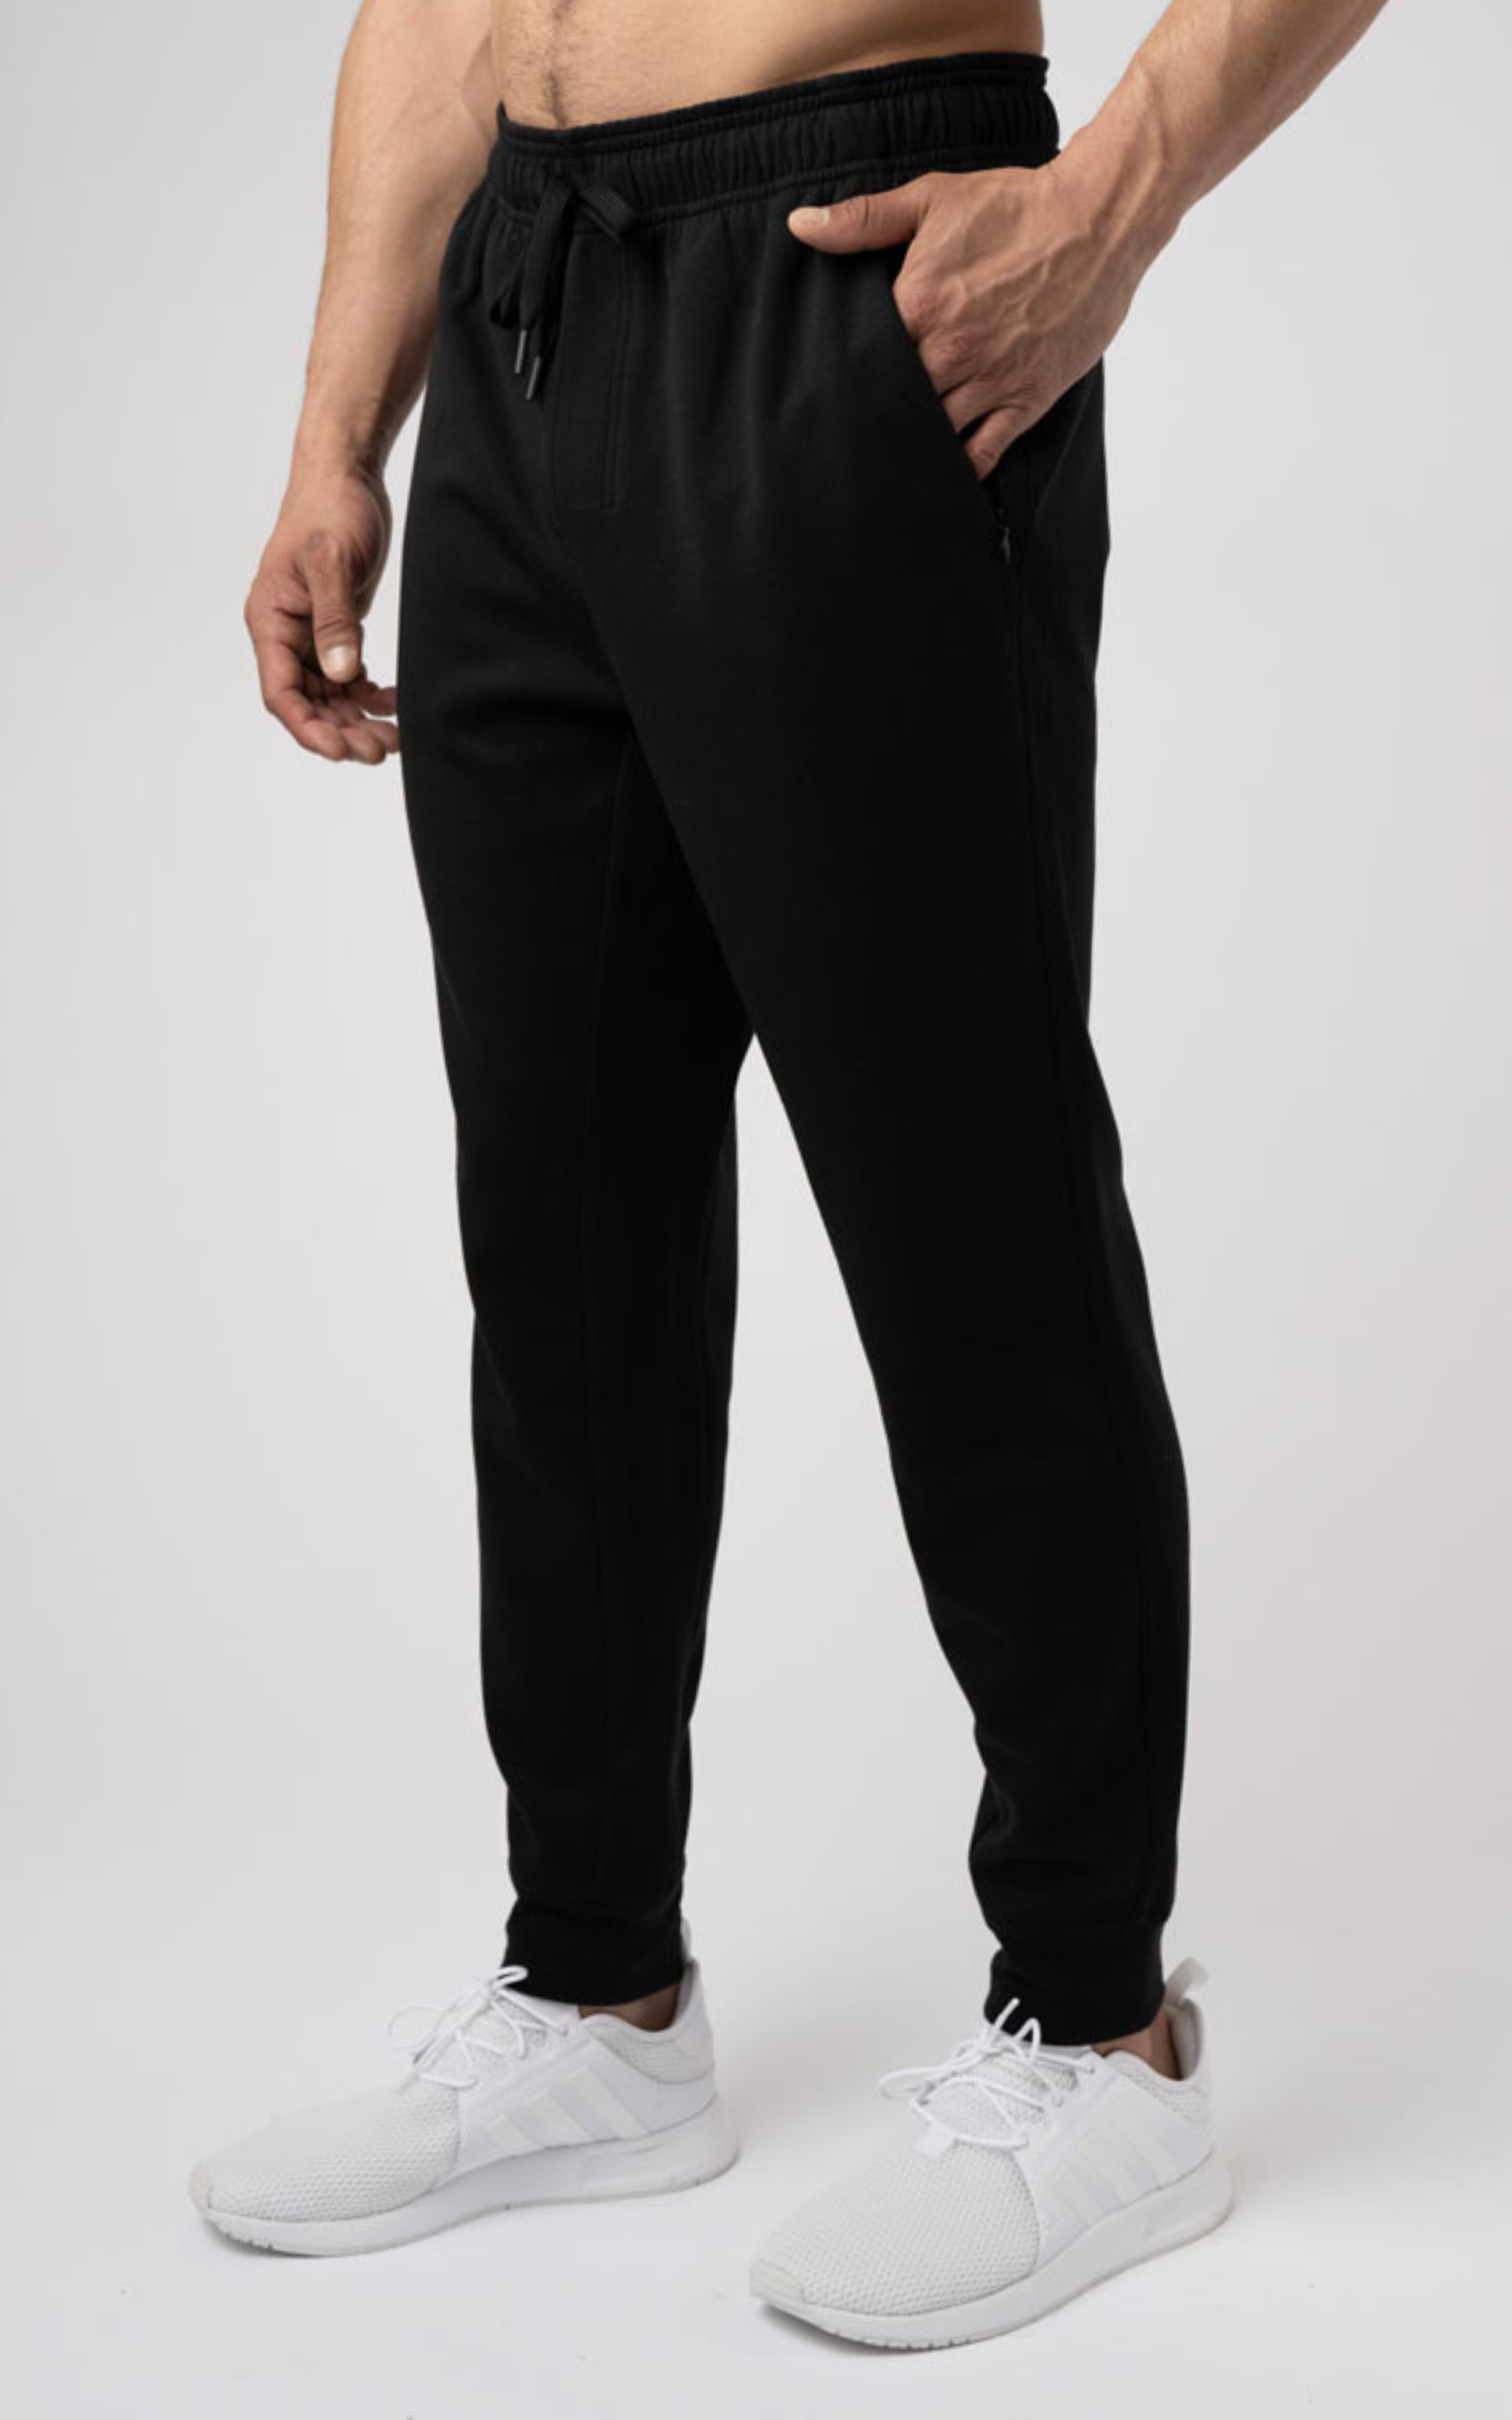 90 Degree By Reflex Men'S Zip Pocket Joggers - Black - Size L for Men